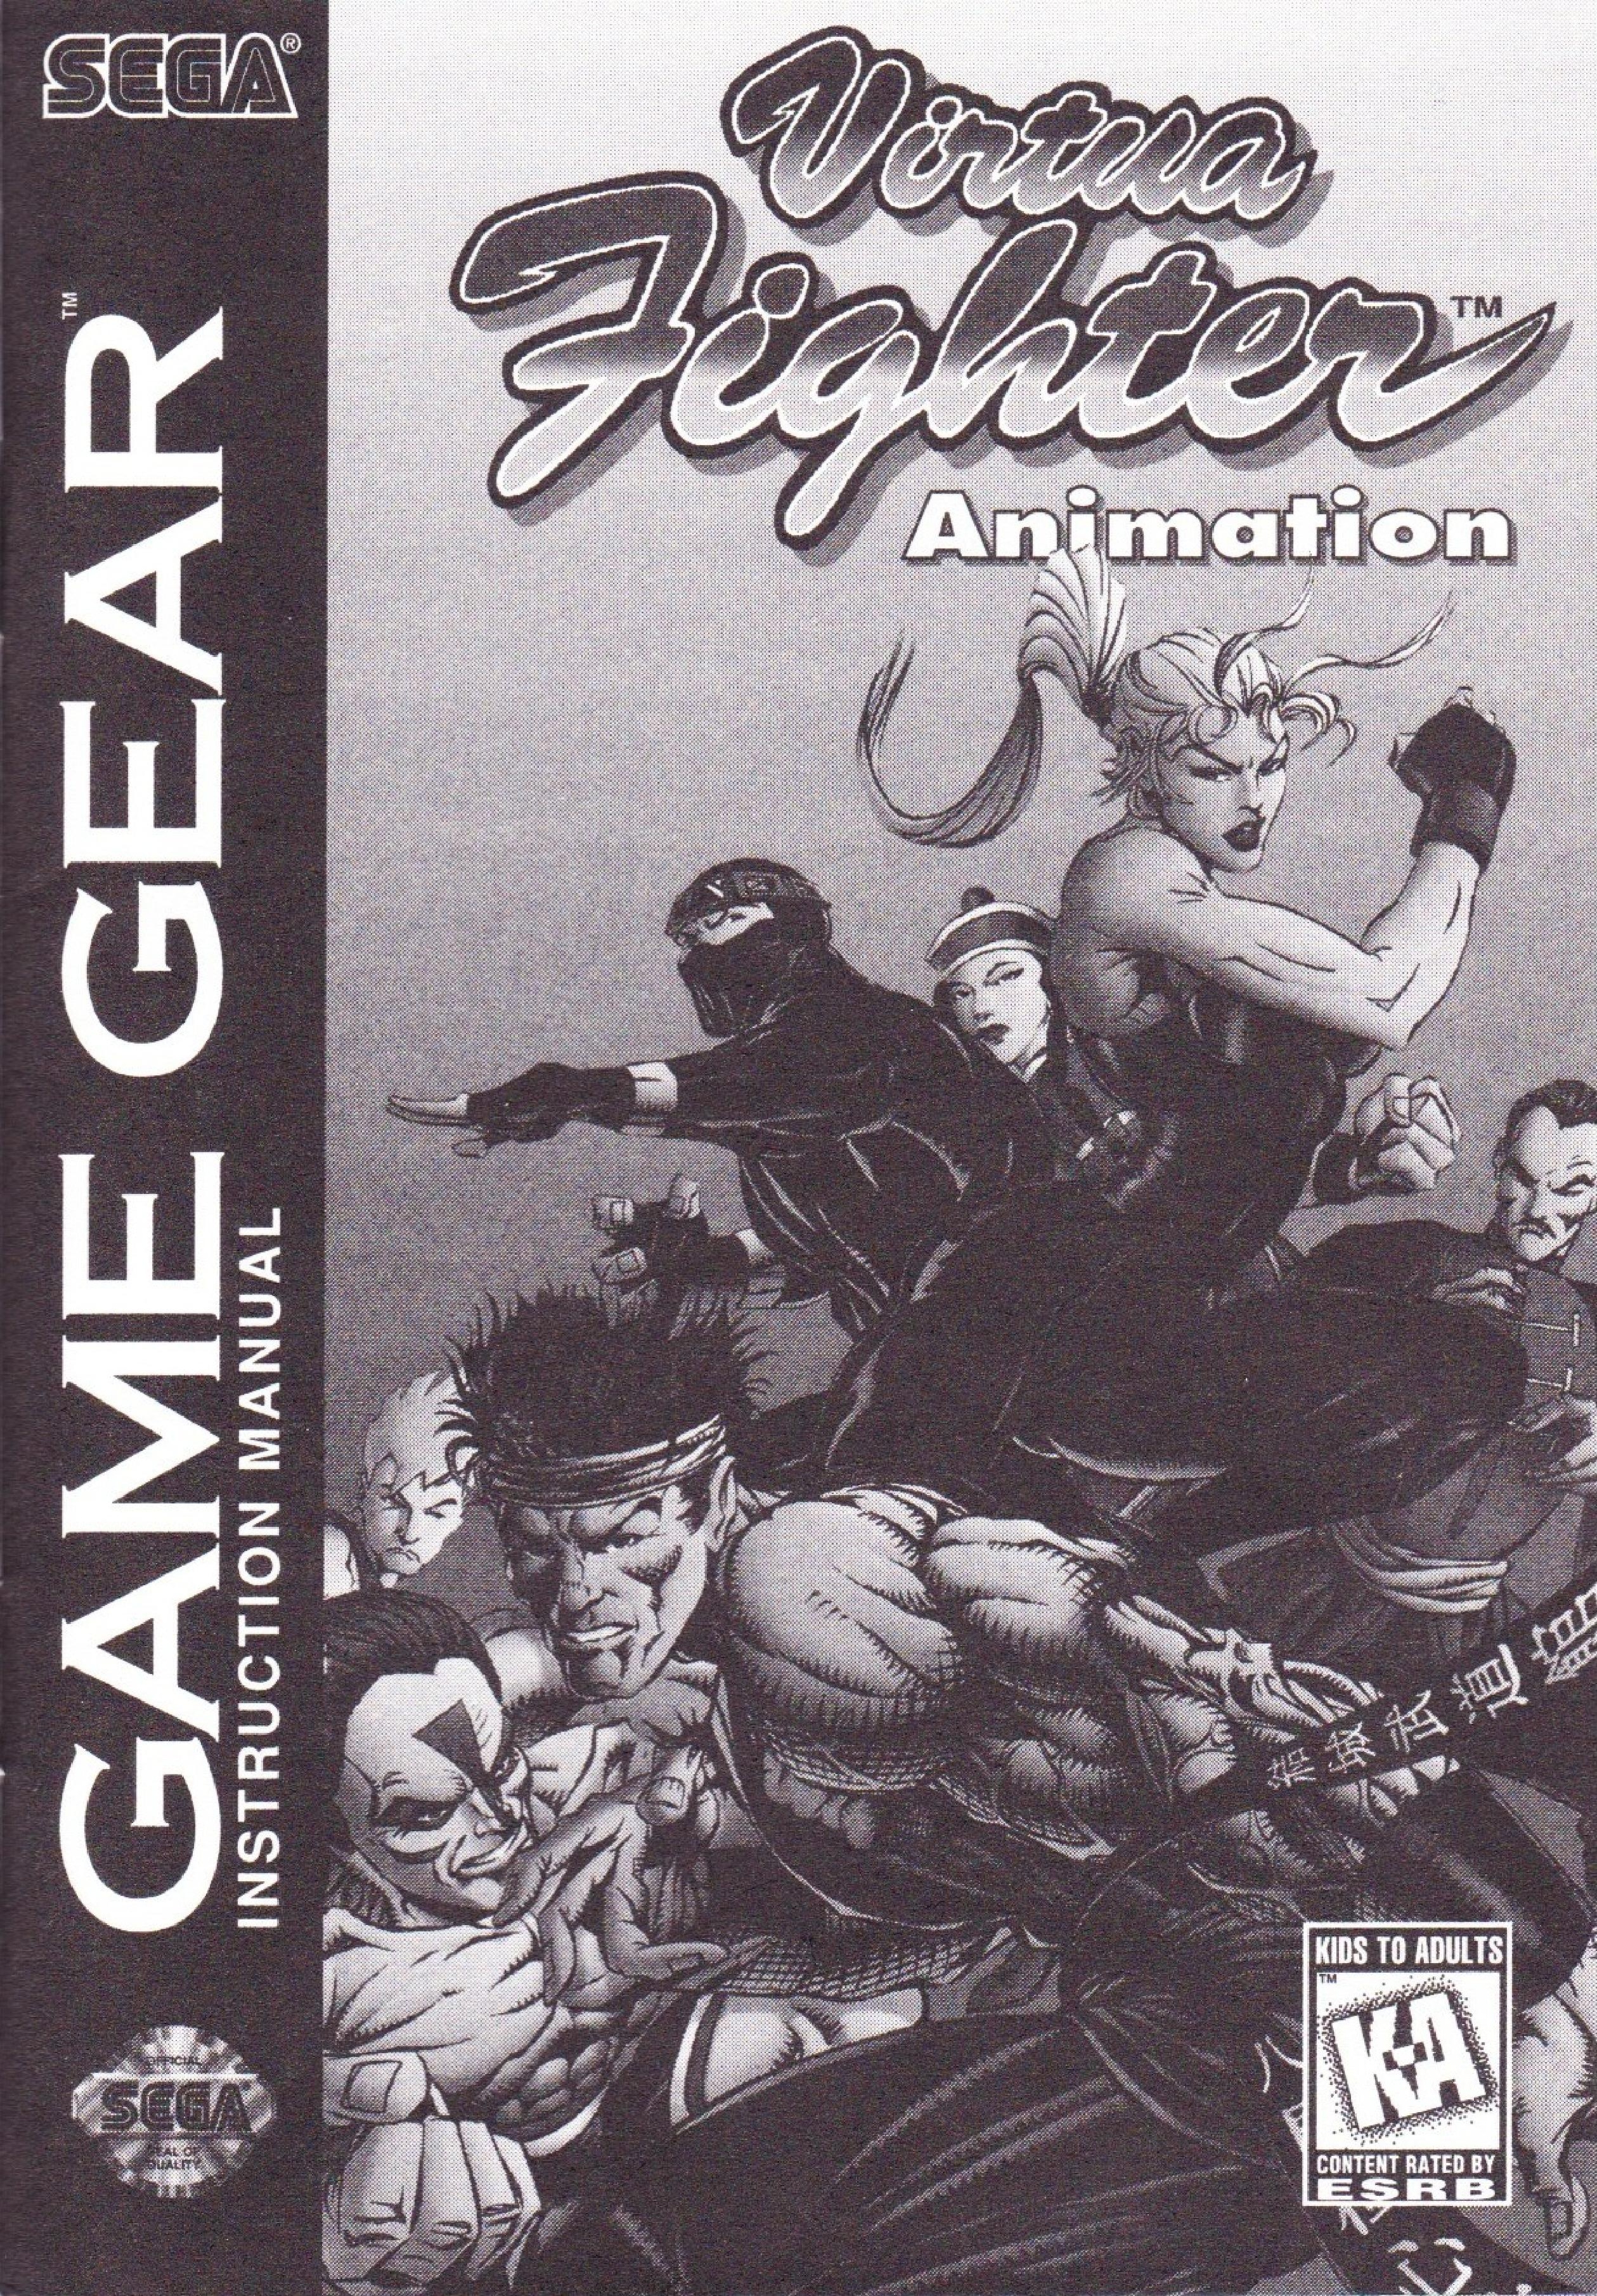 Virtua Fighter Animation GG US Manual.pdf